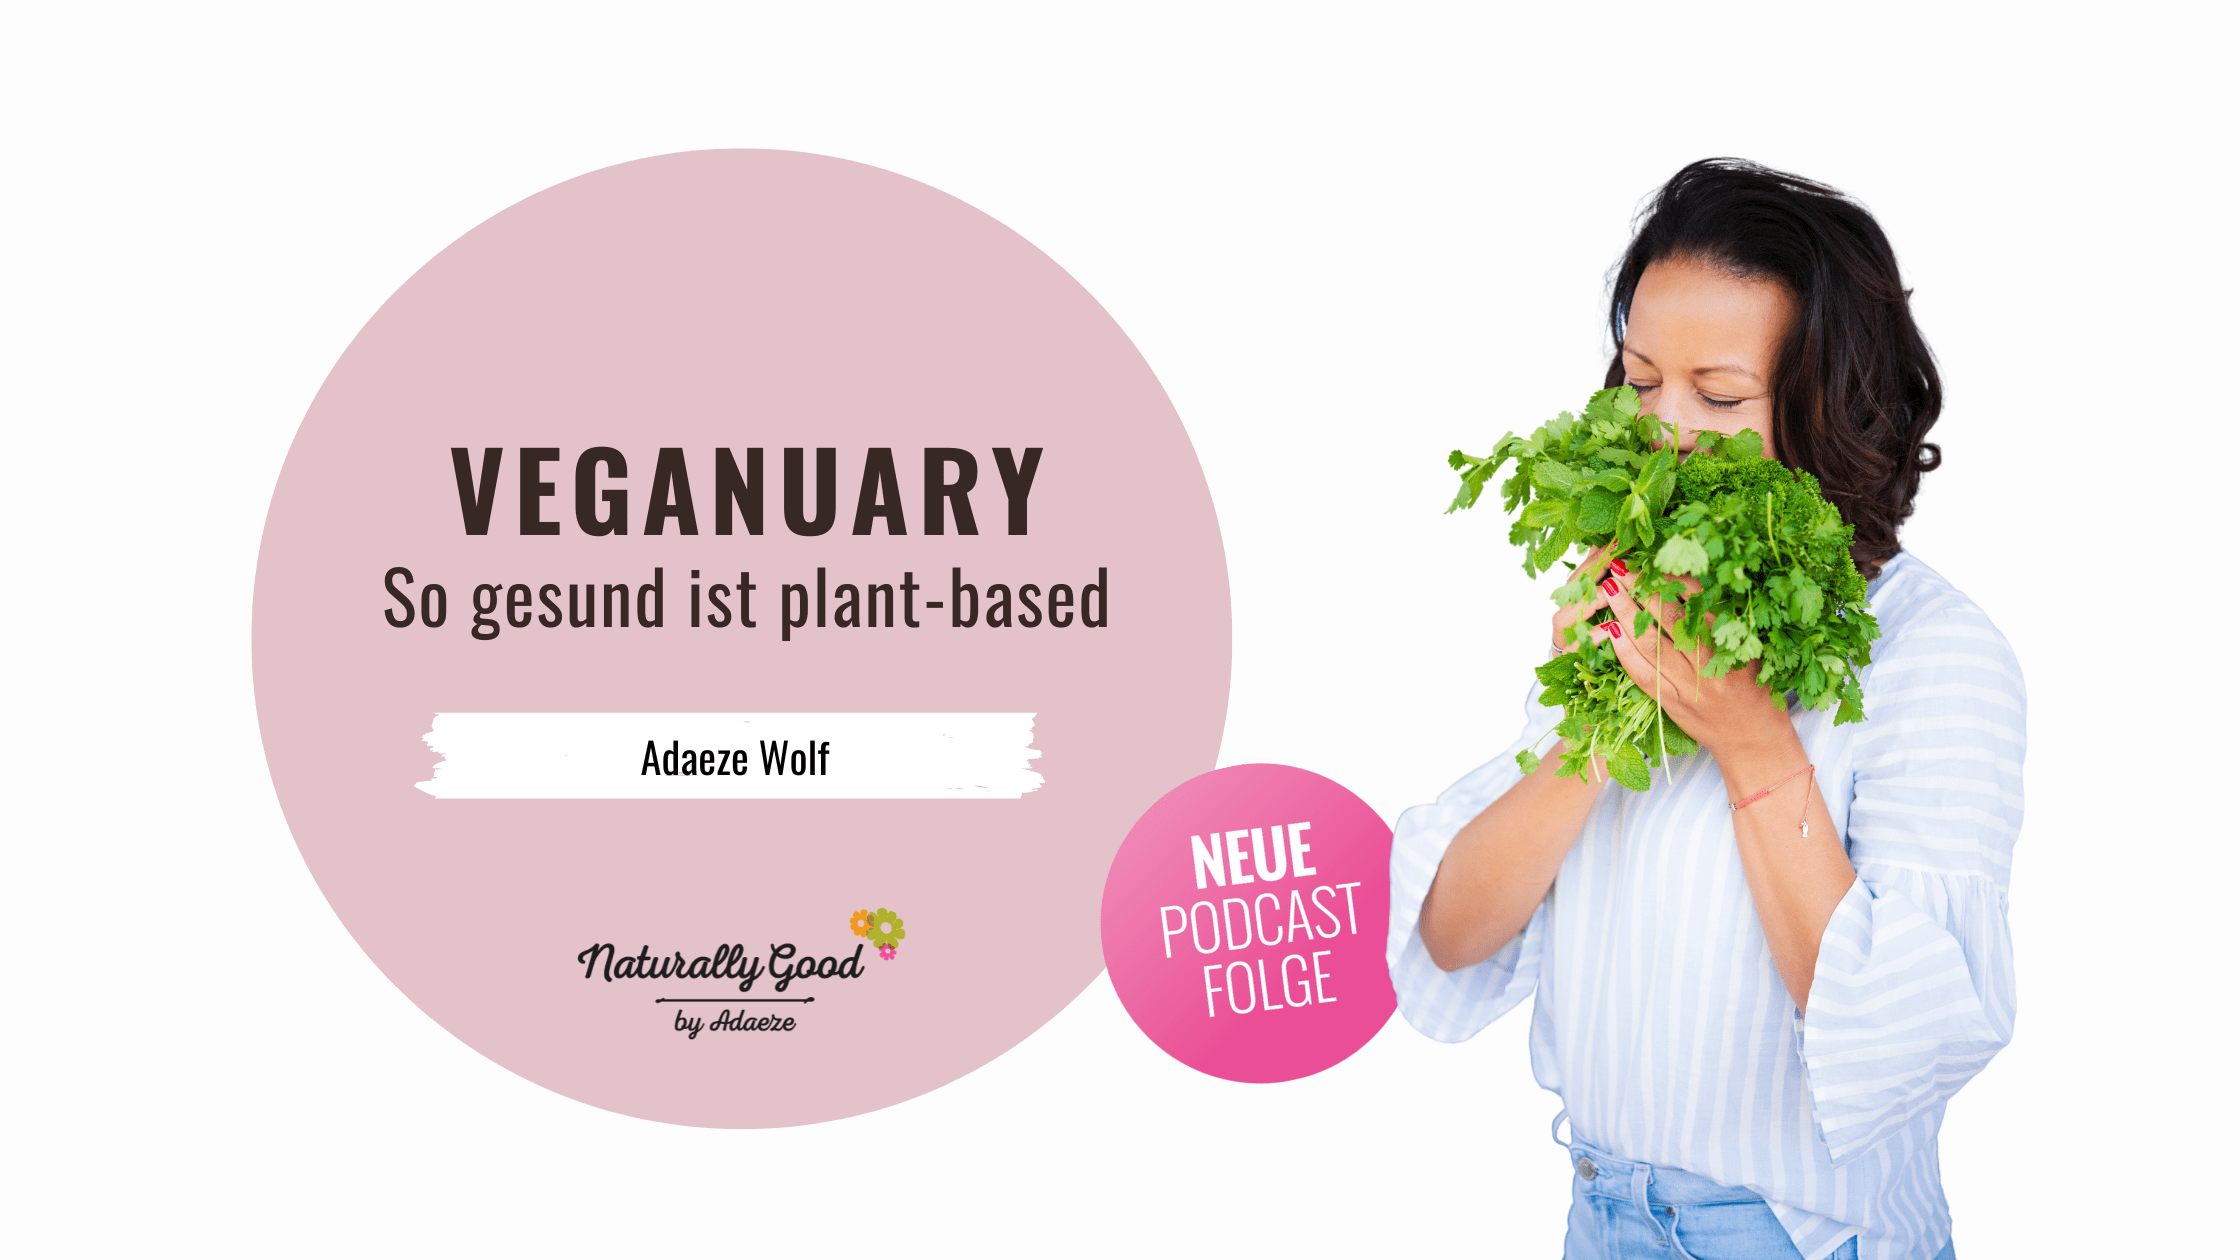 Veganuary - So gesund ist plant-based